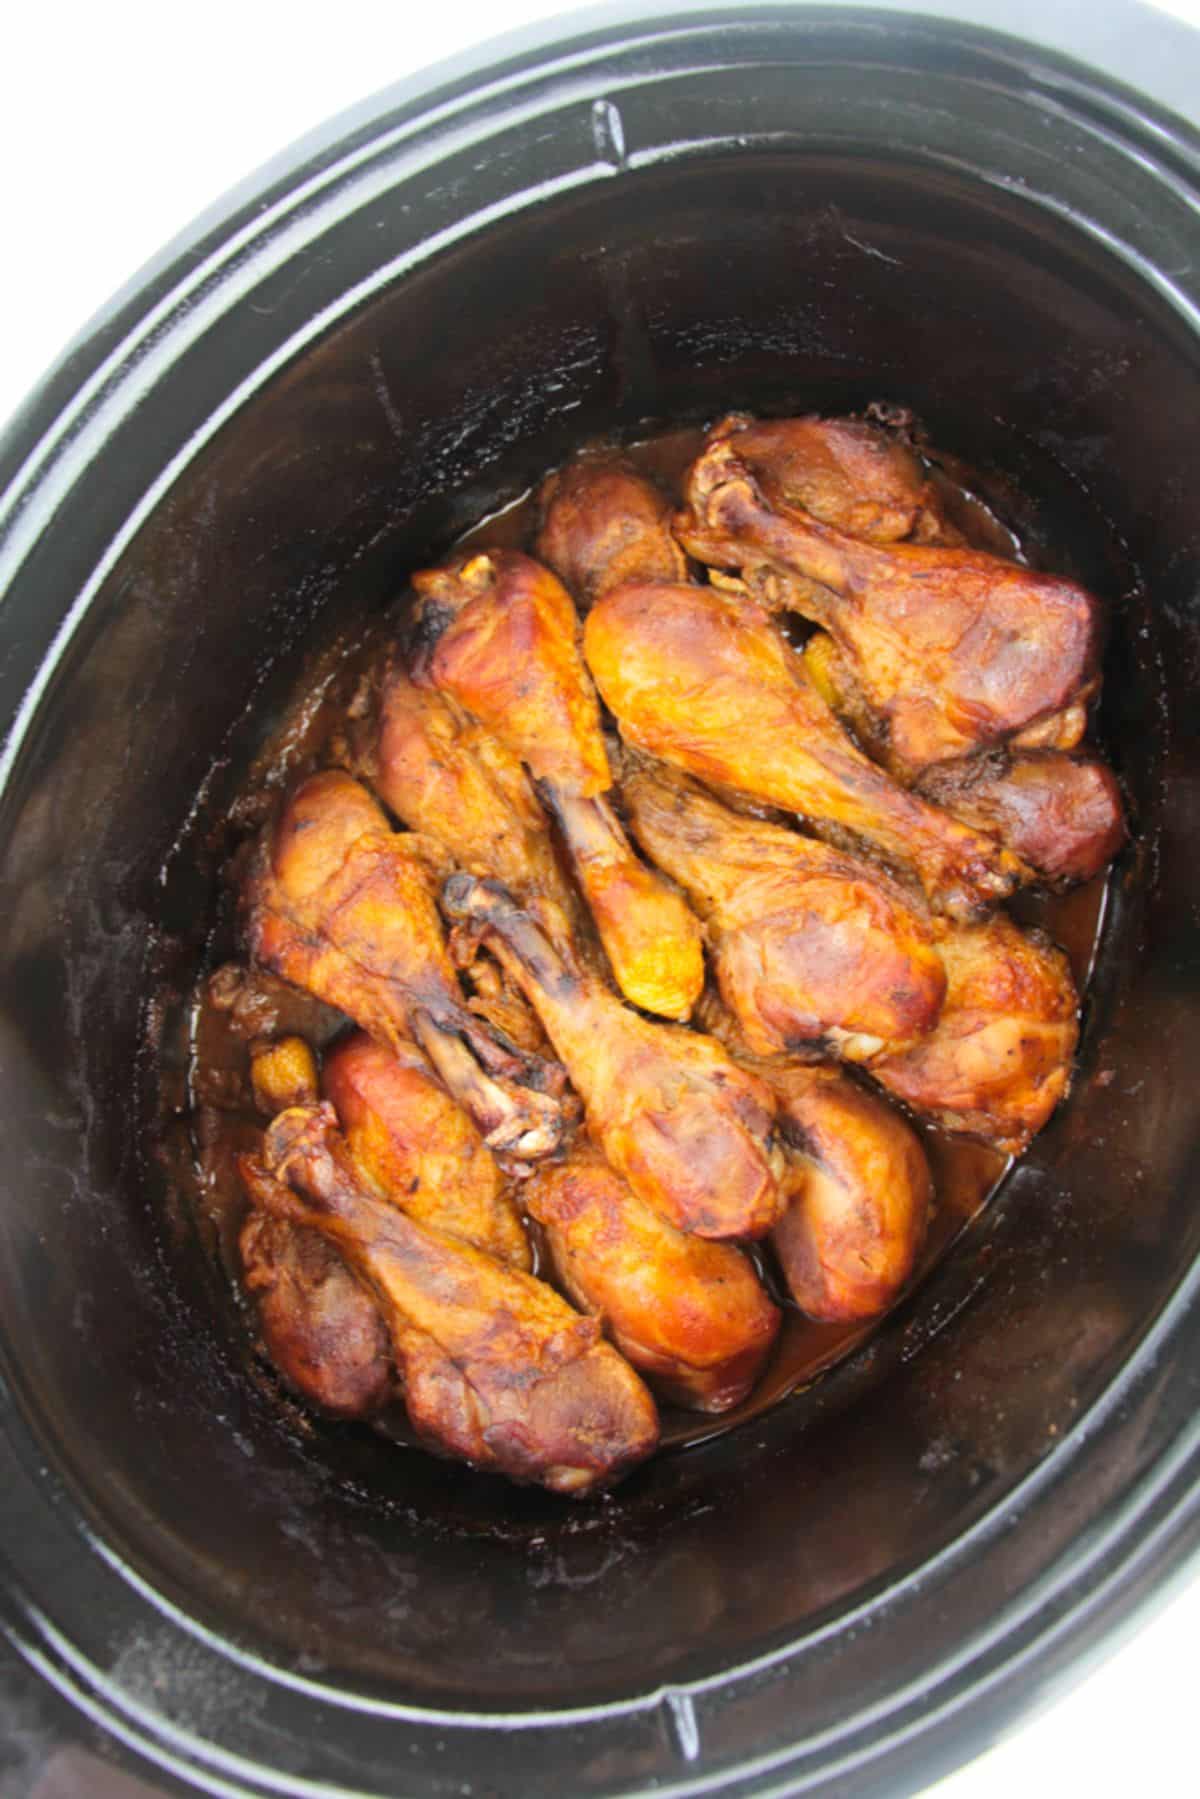 BBQ chicken legs in a crock pot.